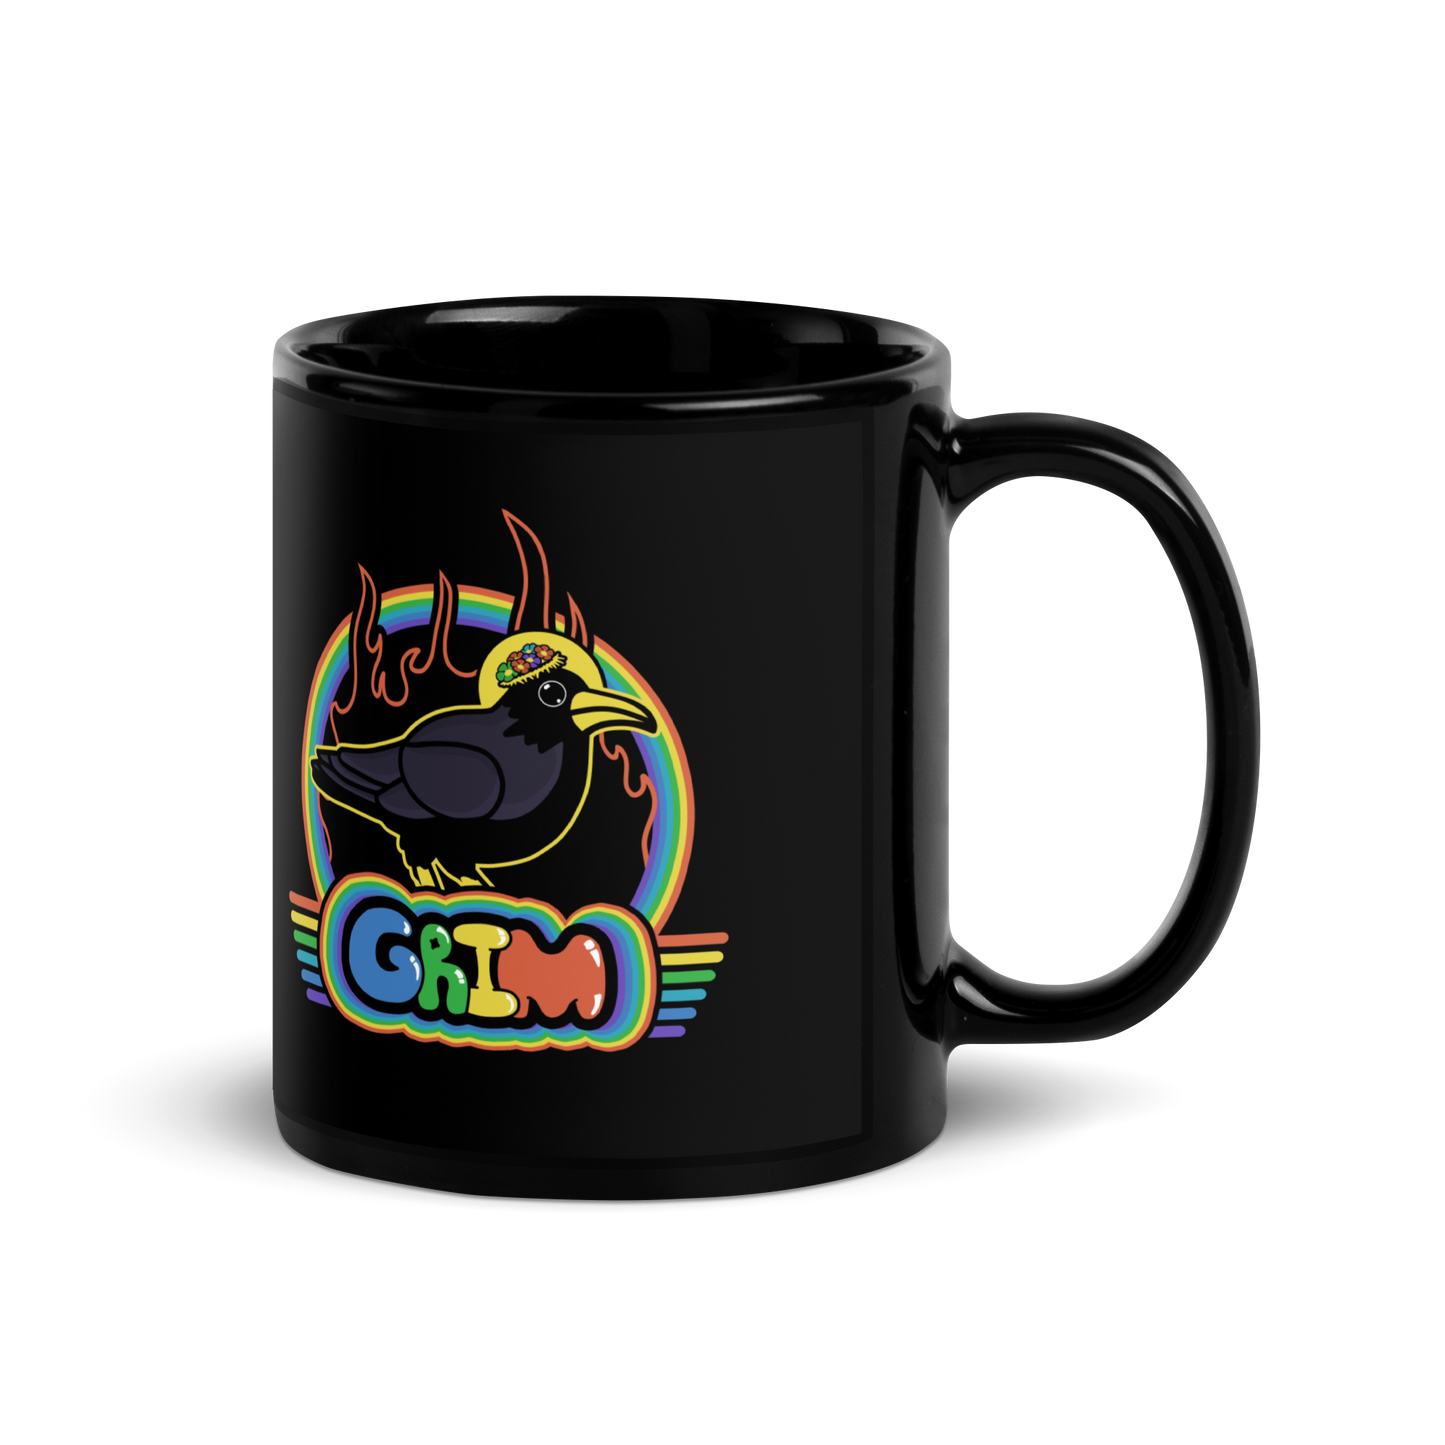 Grim! Raven! Mug!